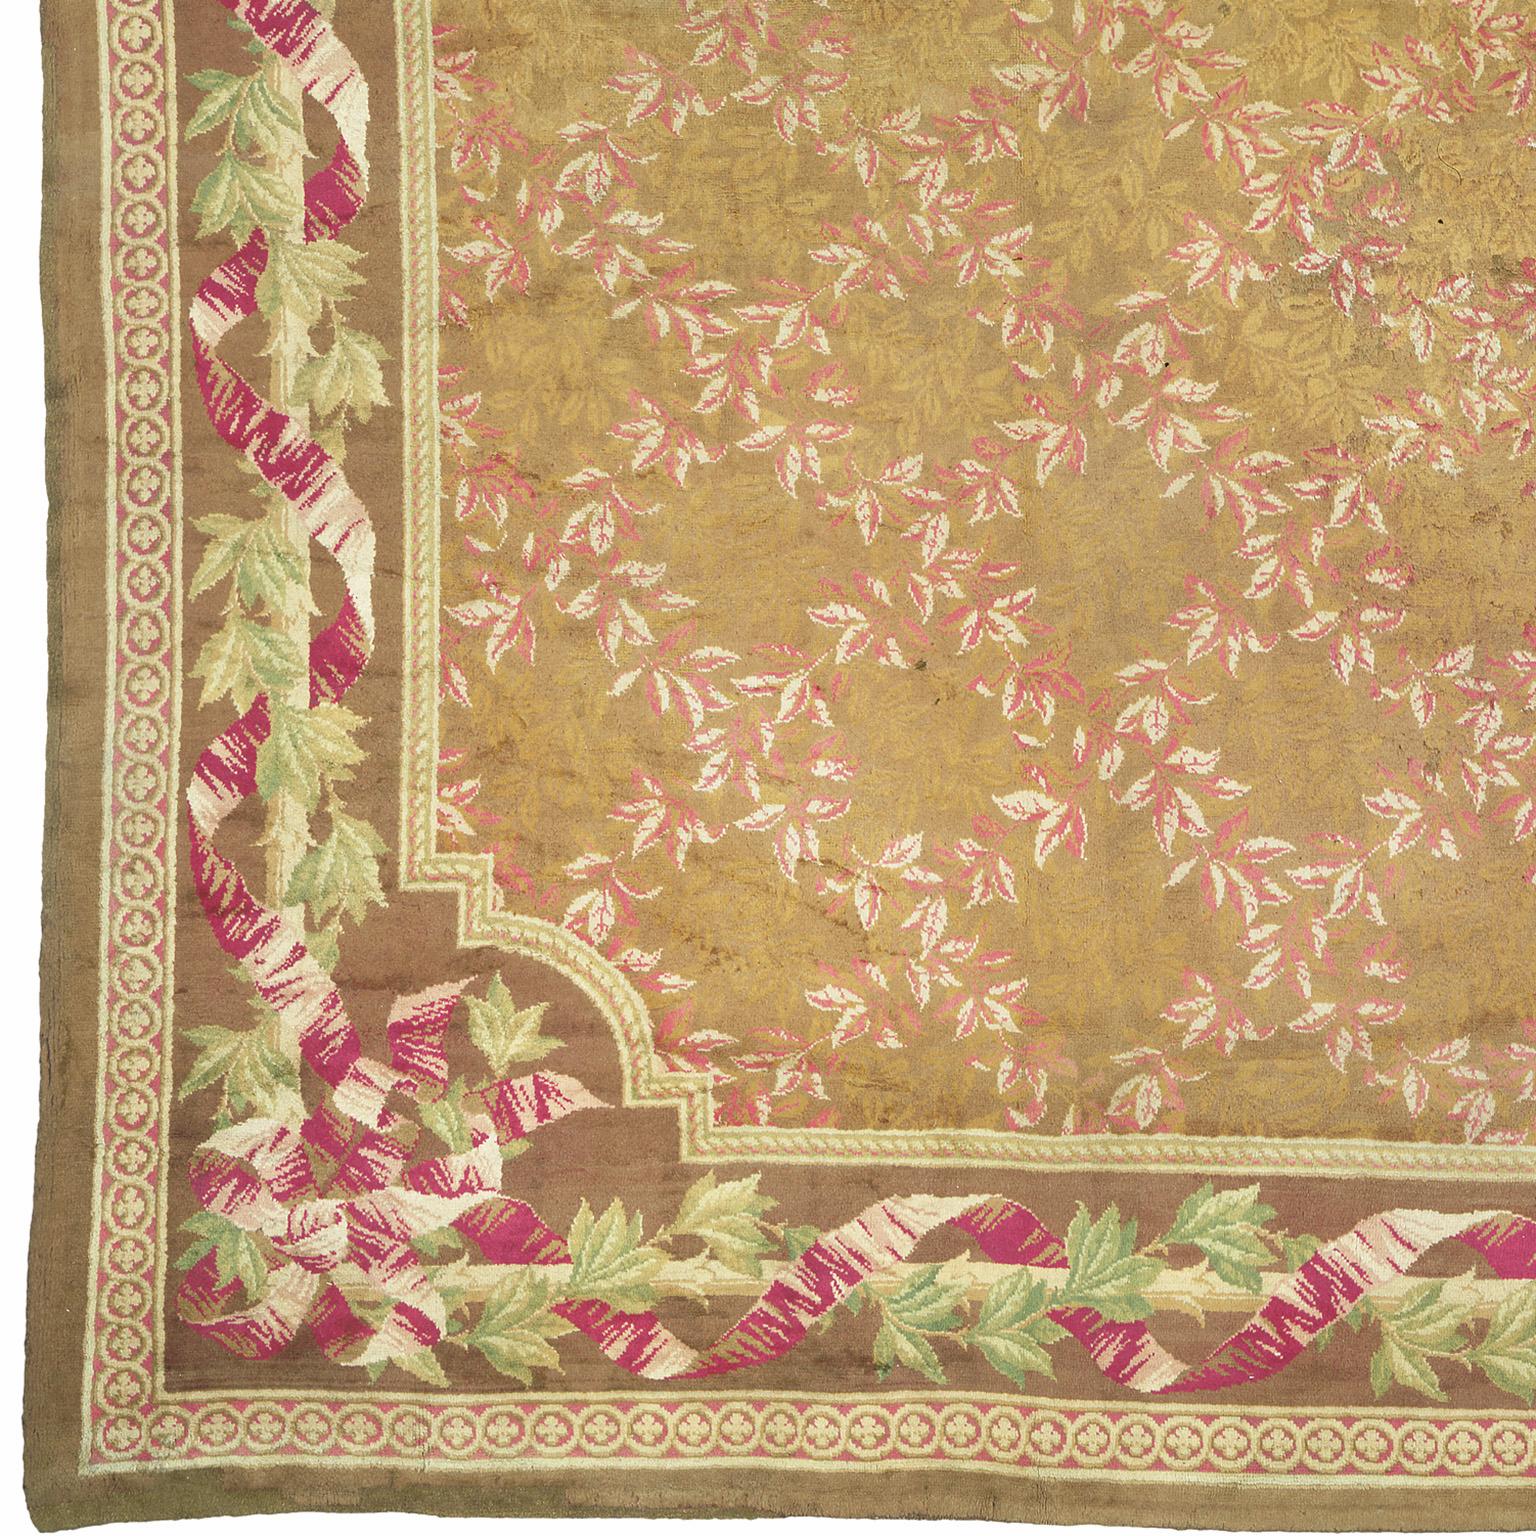 England, circa 1830
Handwoven
Wilton carpet, Regency period
Measures: 24'6